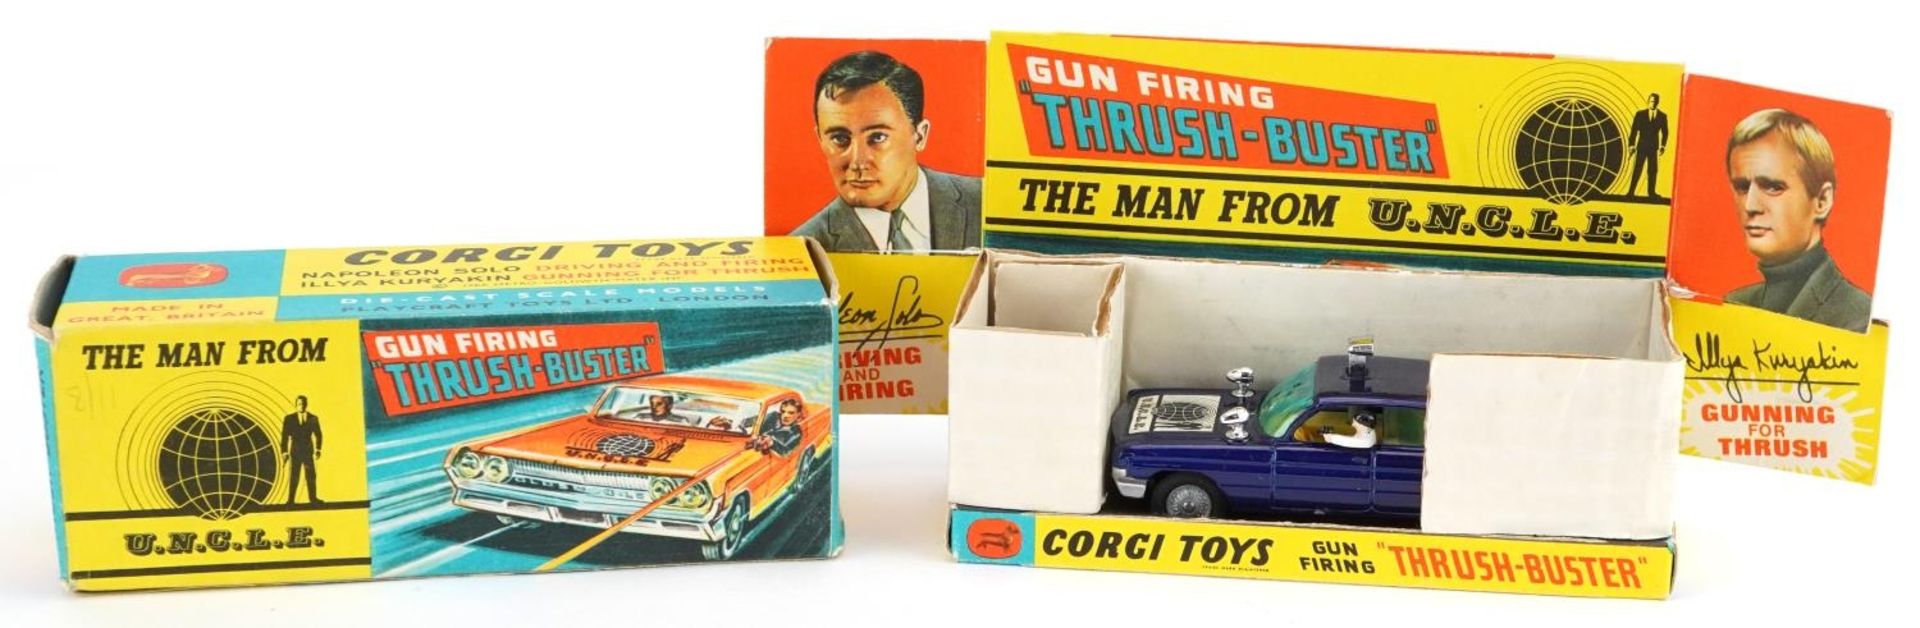 Vintage Corgi Toys diecast Man from U.N.C.L.E gun firing Thrush-buster with box numbered 497 - Bild 2 aus 5